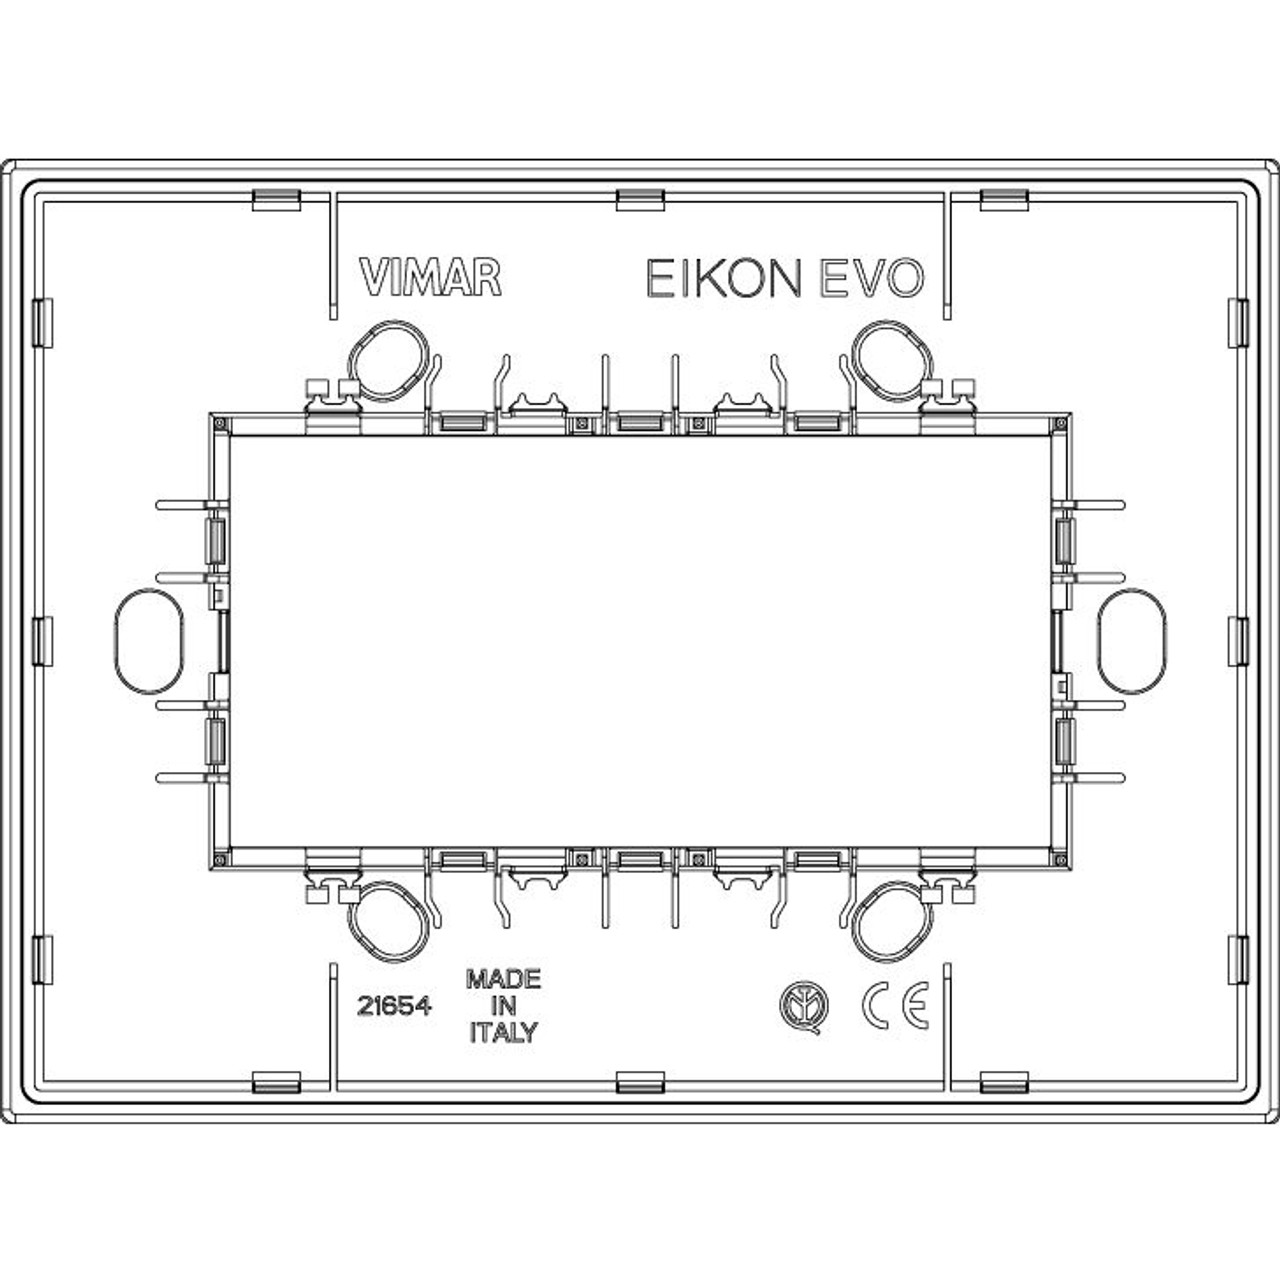 Vimar - Eikon EVO 21654 Cover Plate - 4 Module, Glass - Apollo Lighting